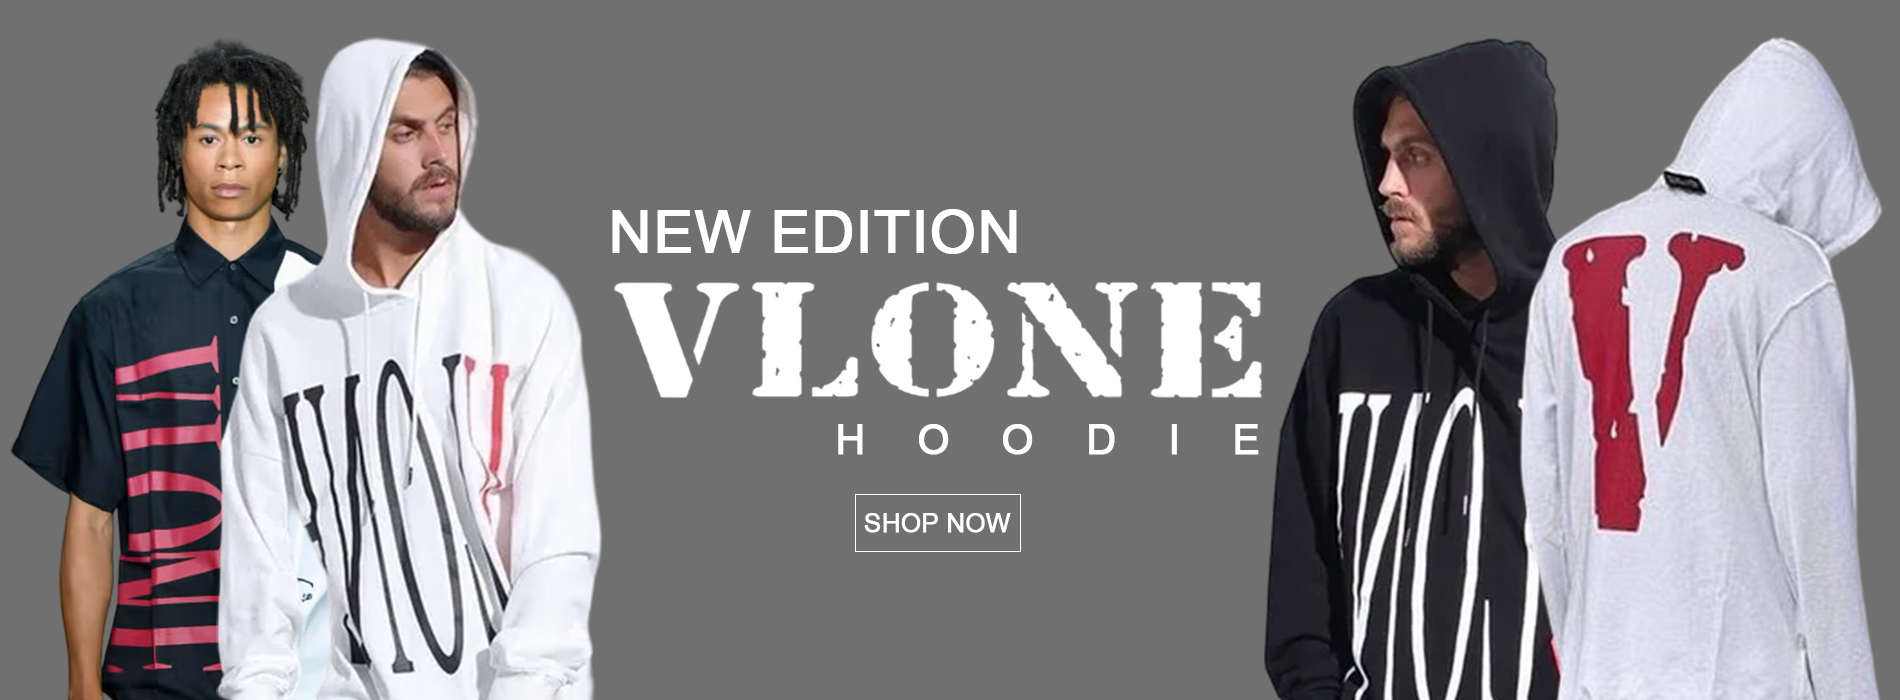 New-Edition-VLone-Hoodie